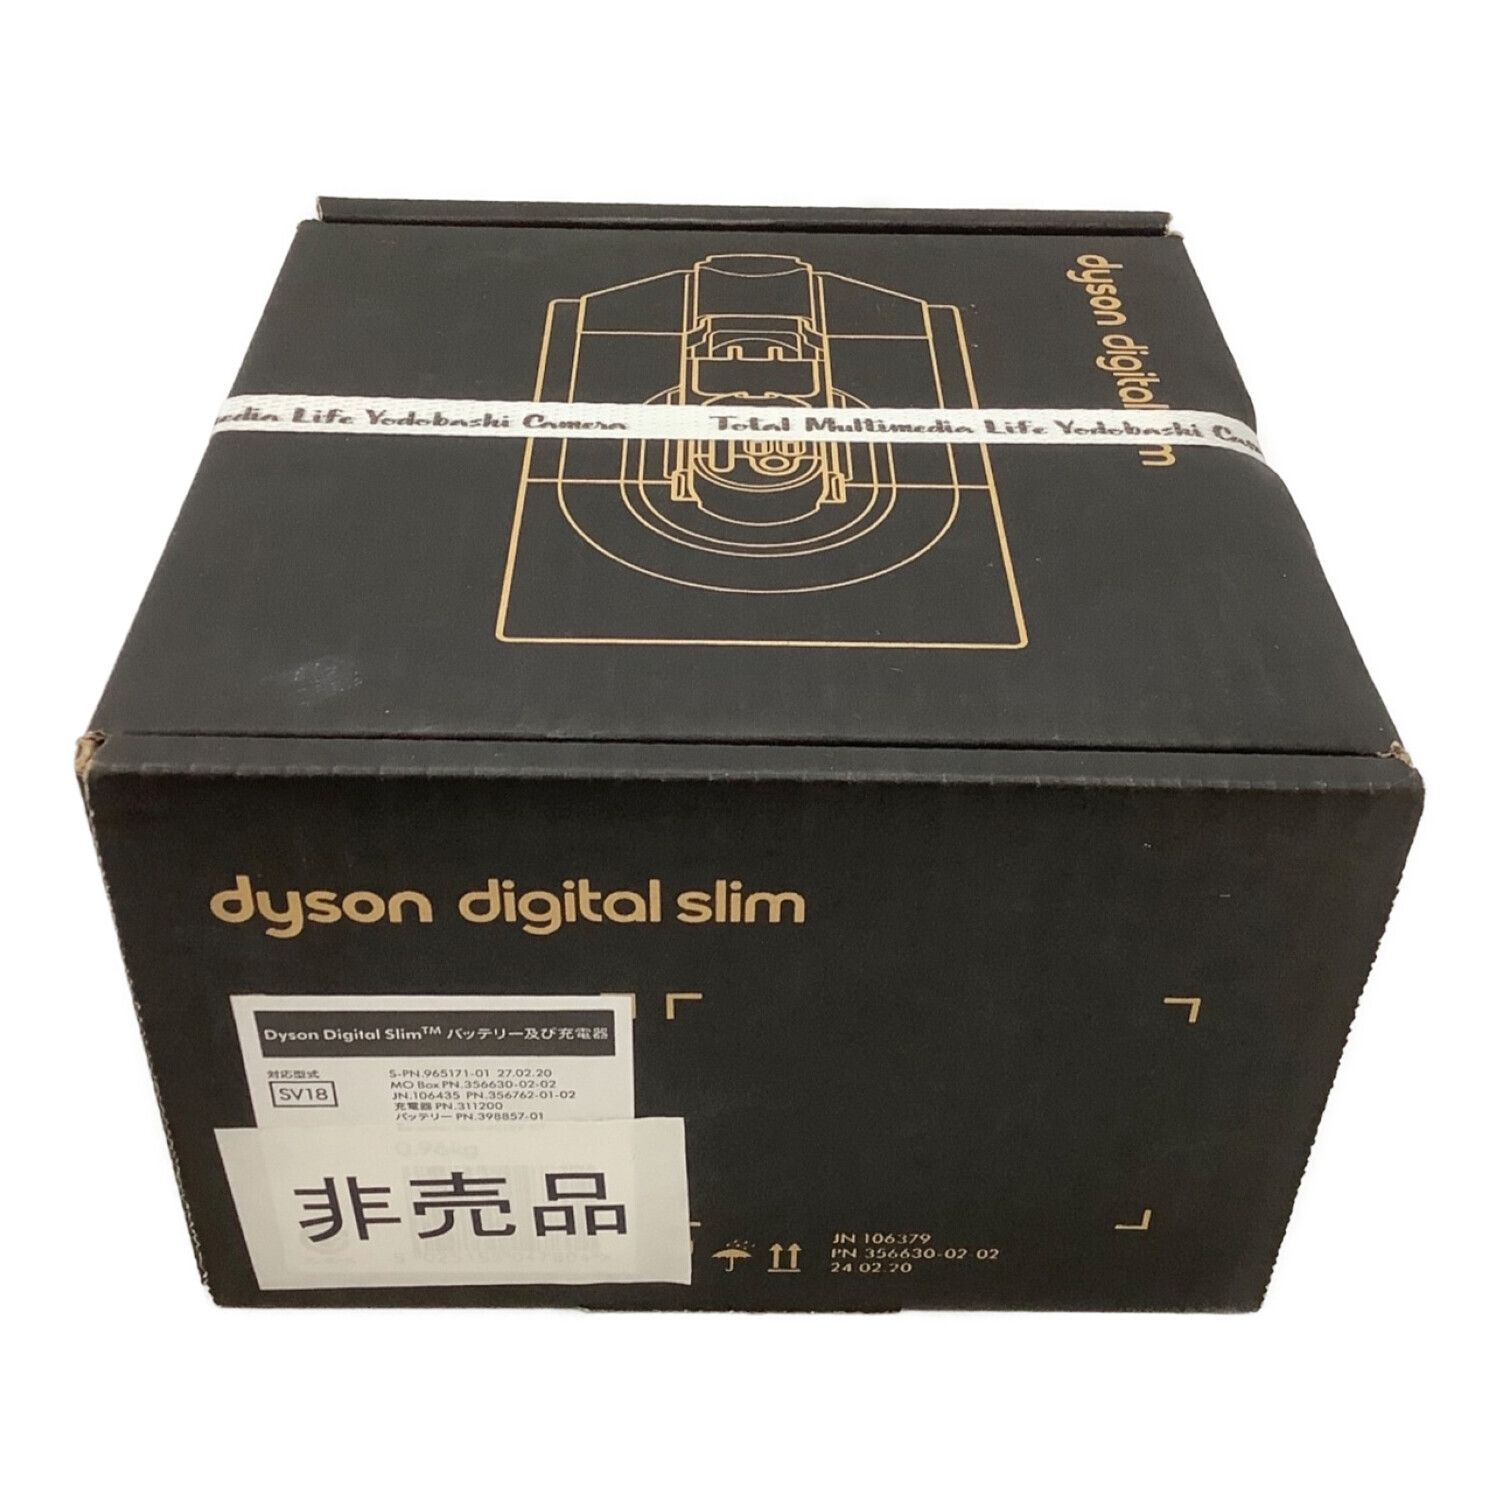 dyson (ダイソン) DIGITAL SLIM用バッテリー及び充電器